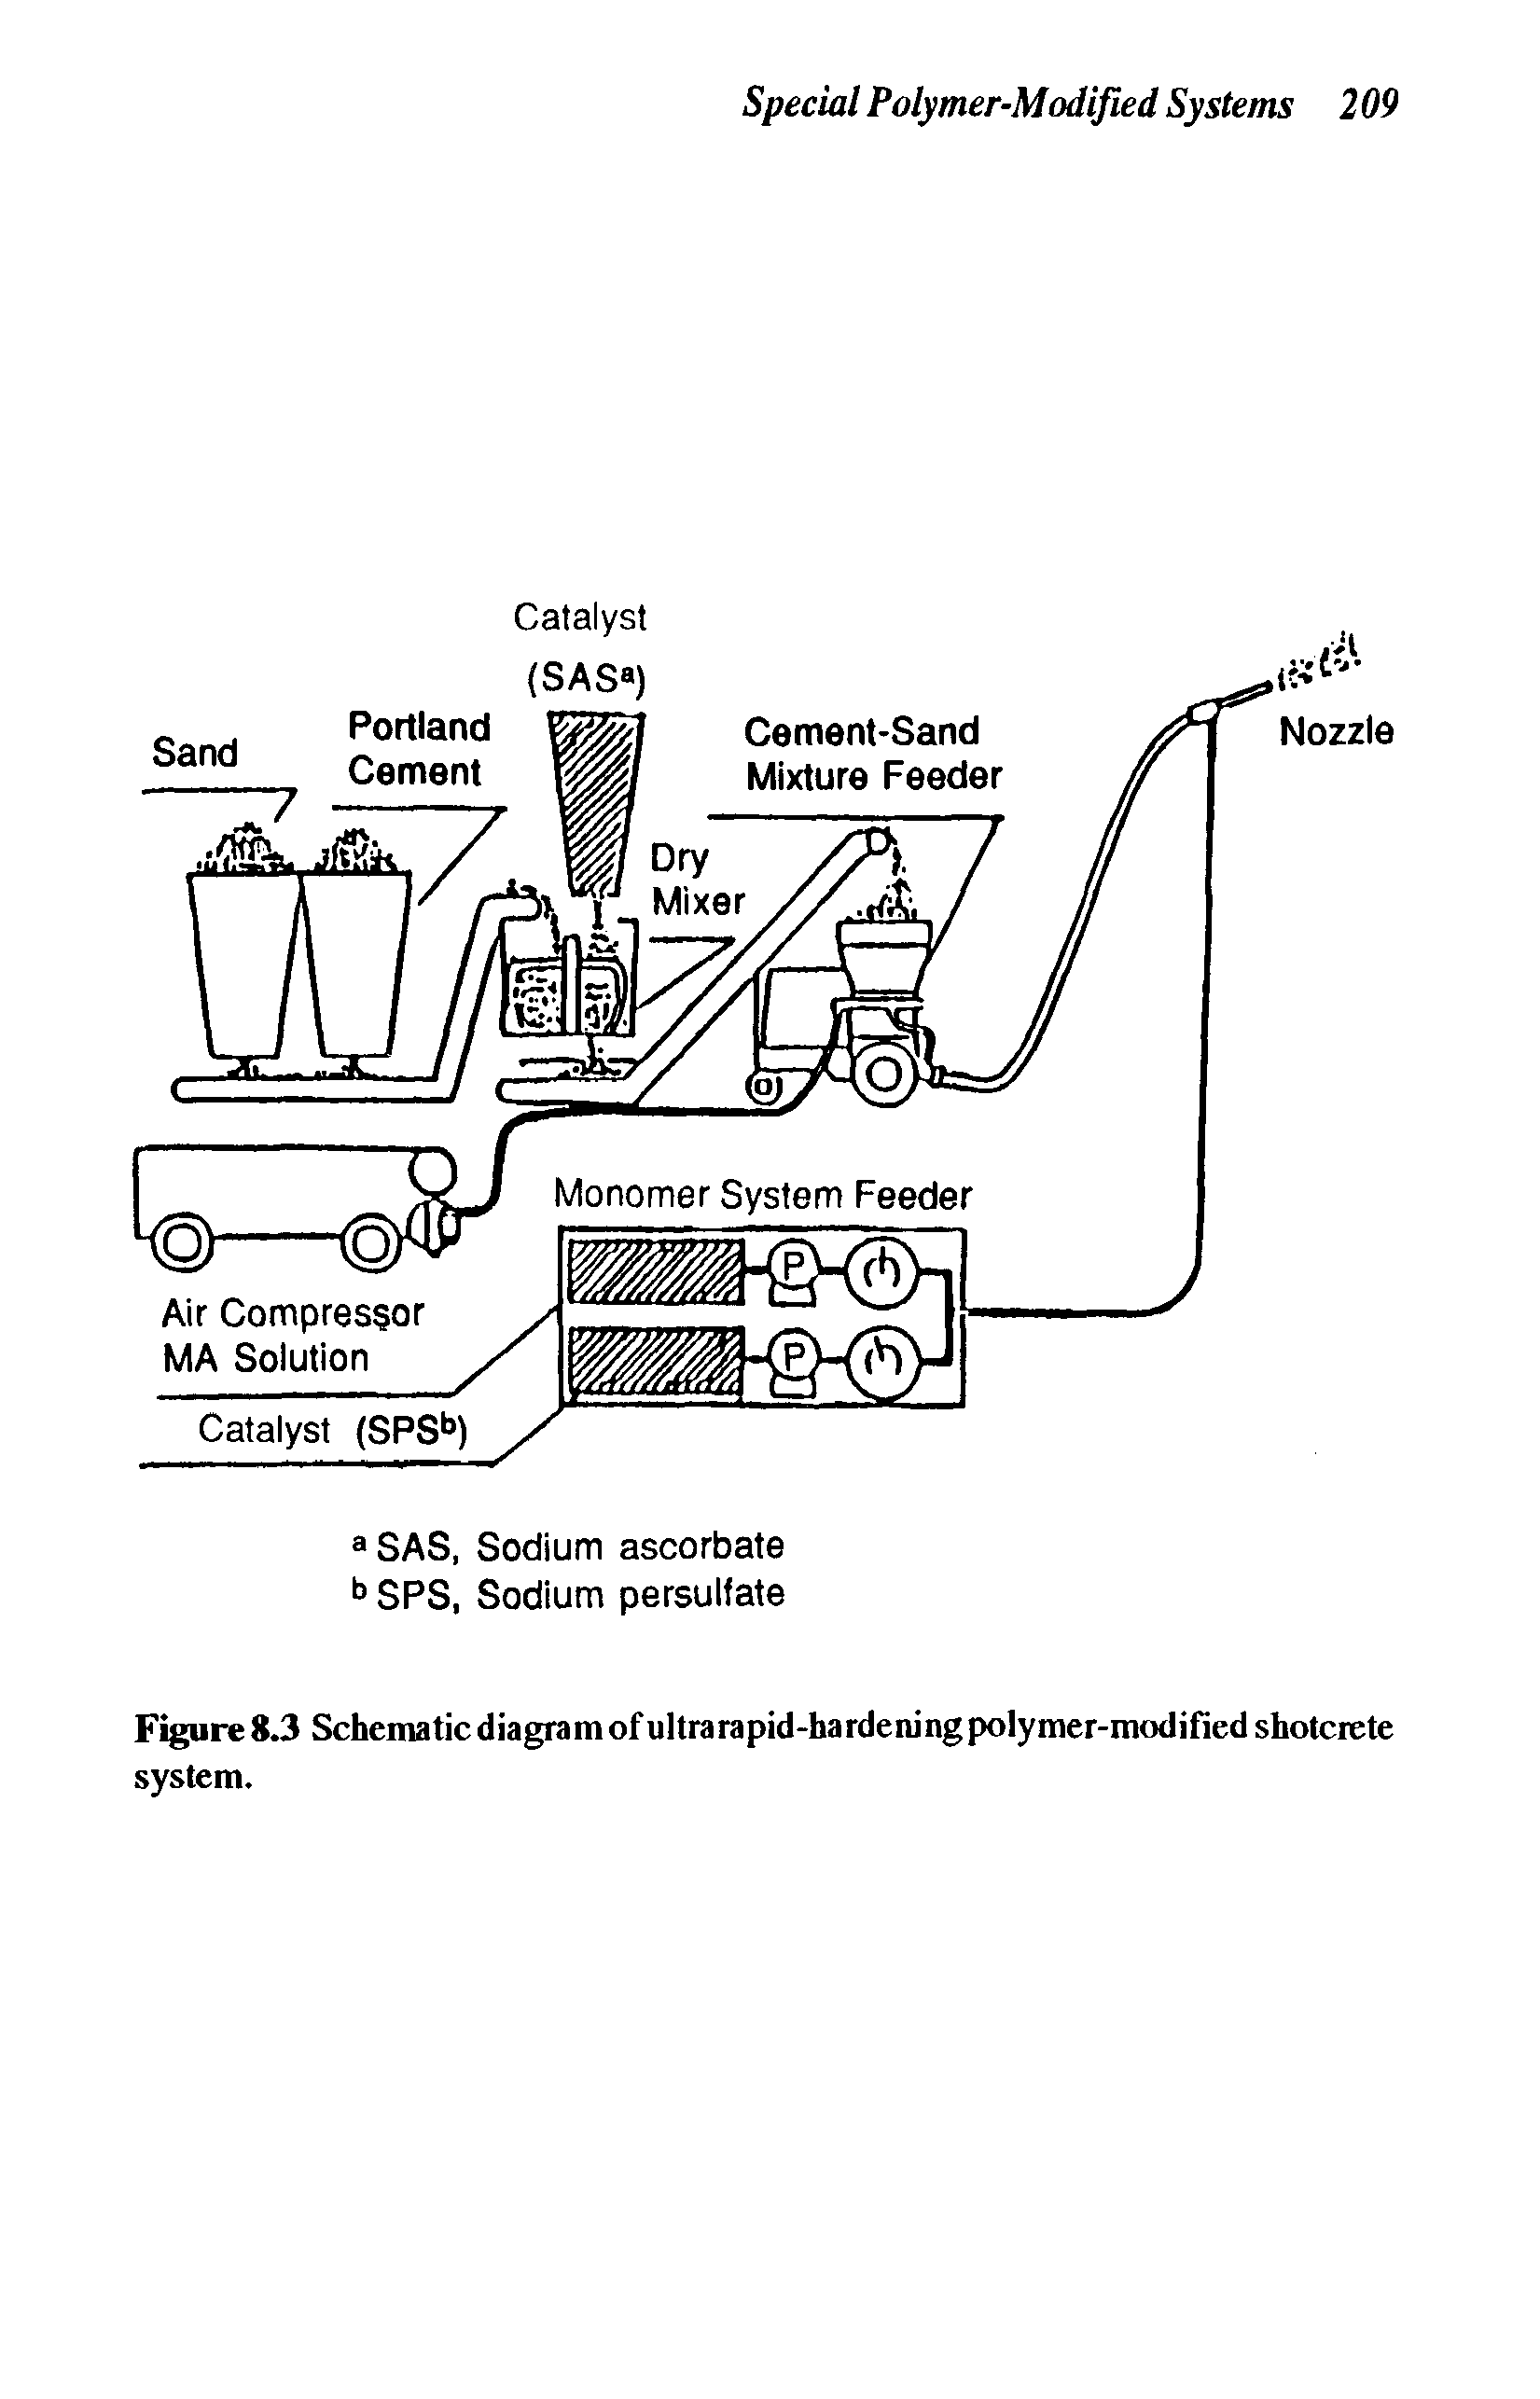 Figure 8.3 Schematic diagram of ultra rapid-hardening polymer-modified shotcrete system.